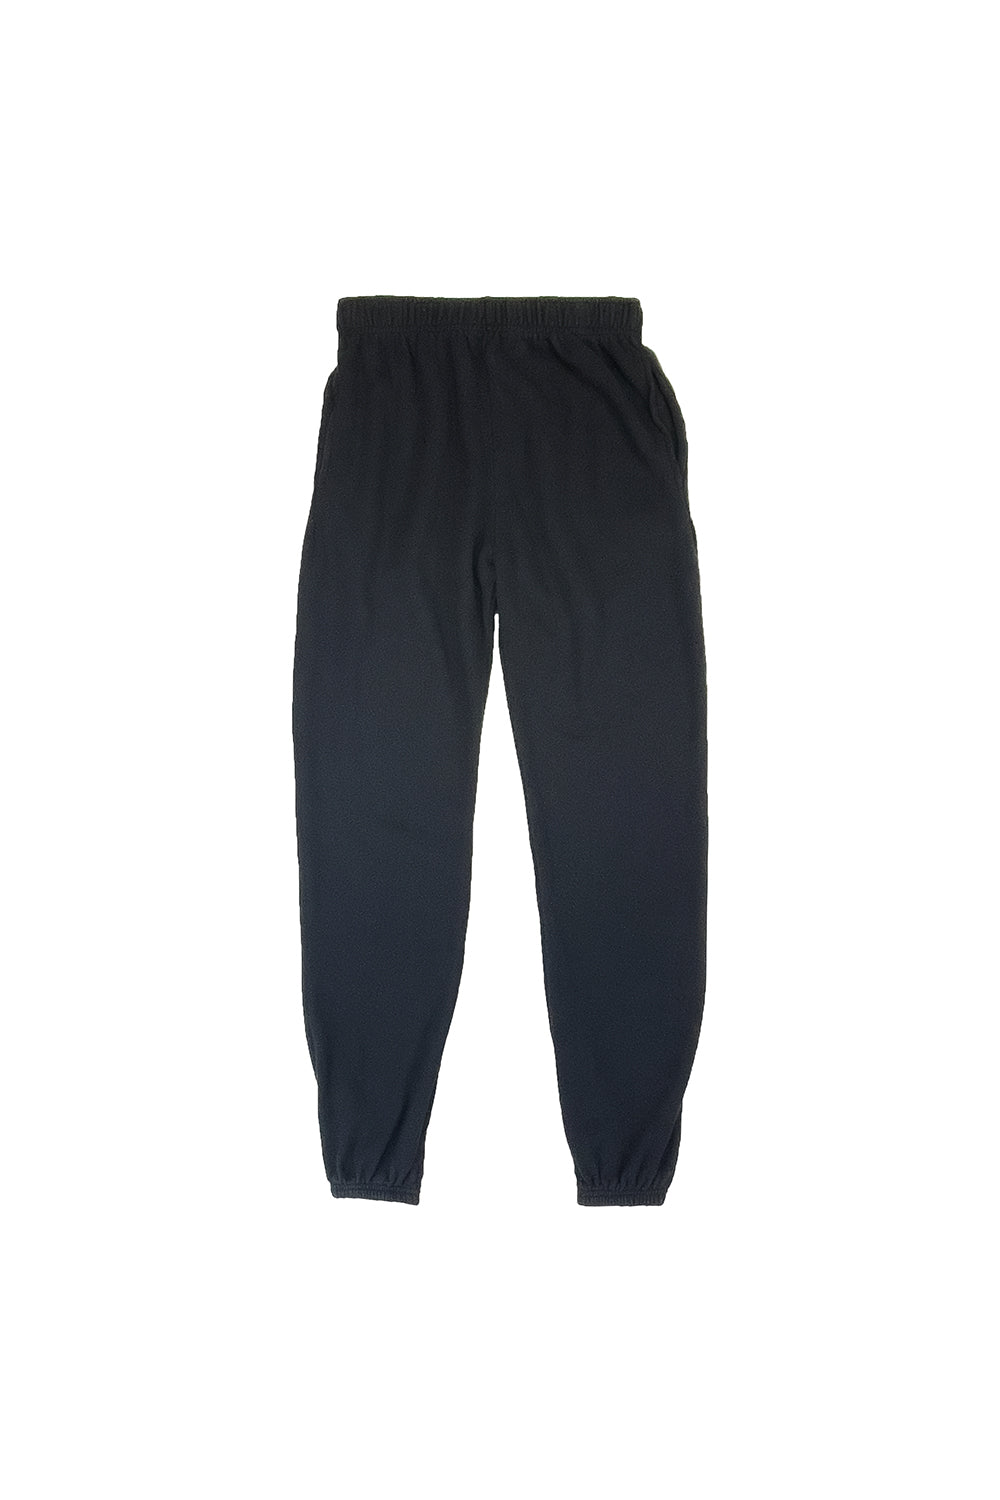 Classic Sweatpant | Jungmaven Hemp Clothing & Accessories / Color: Black